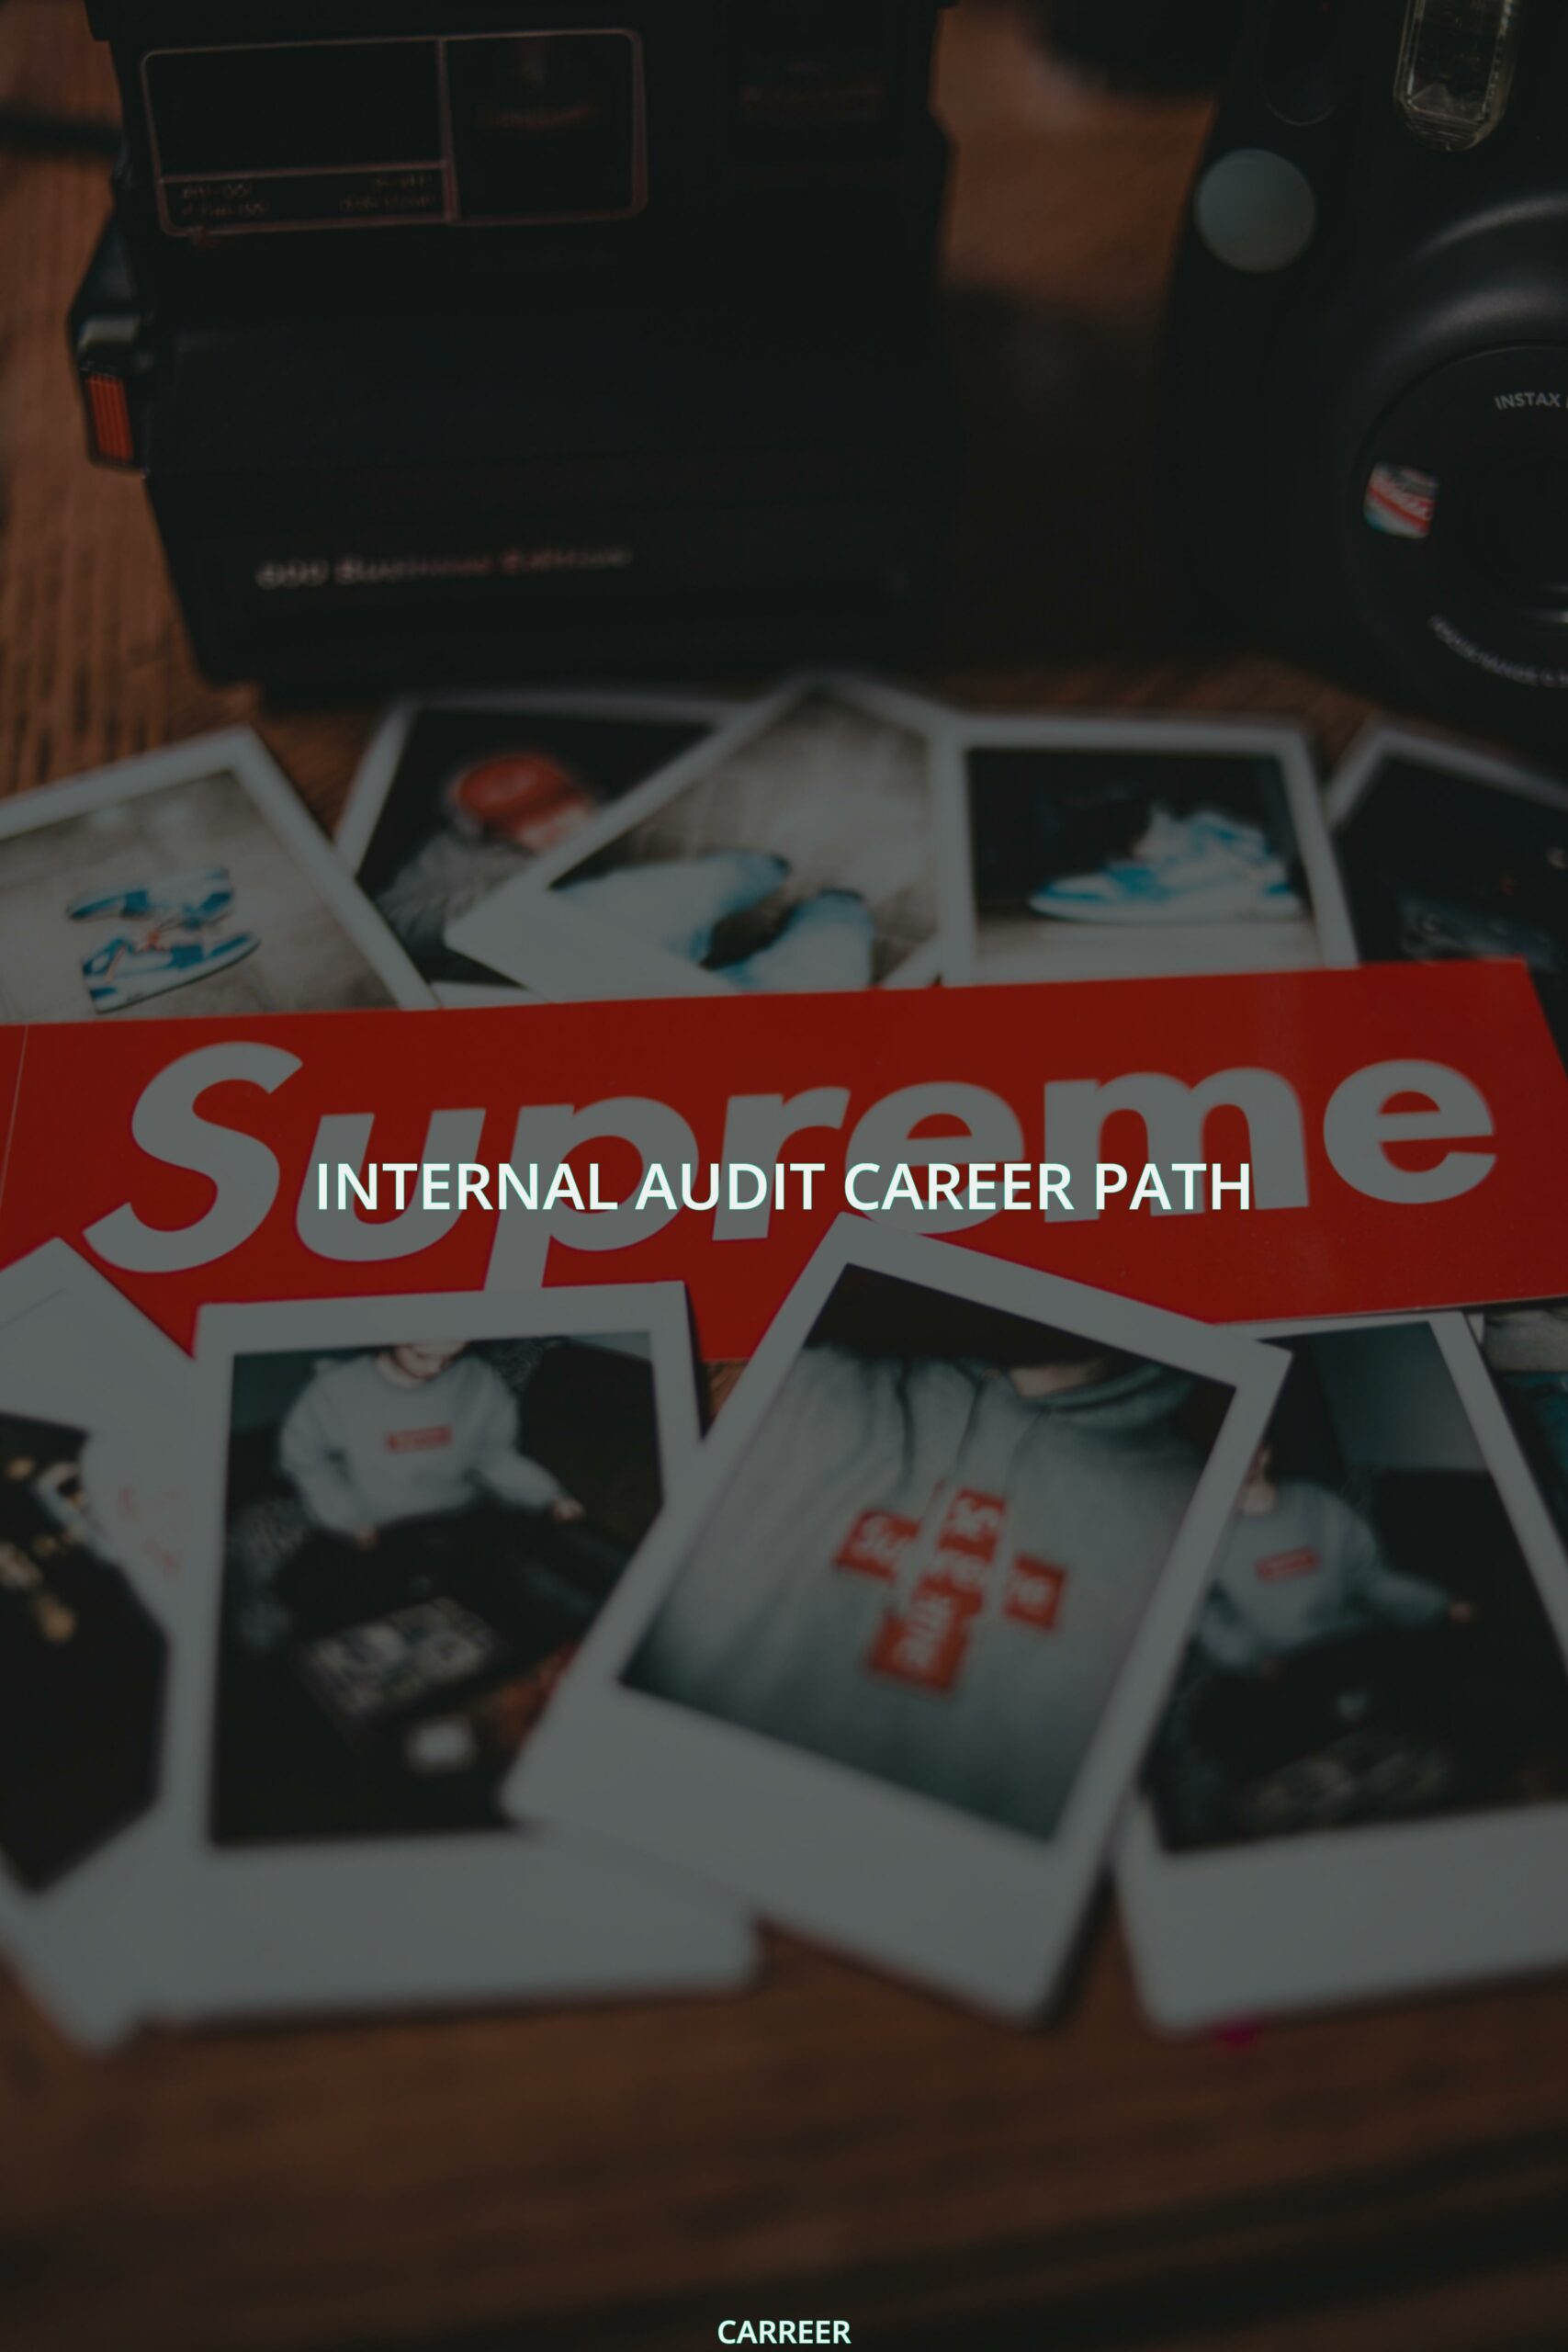 Internal audit career path